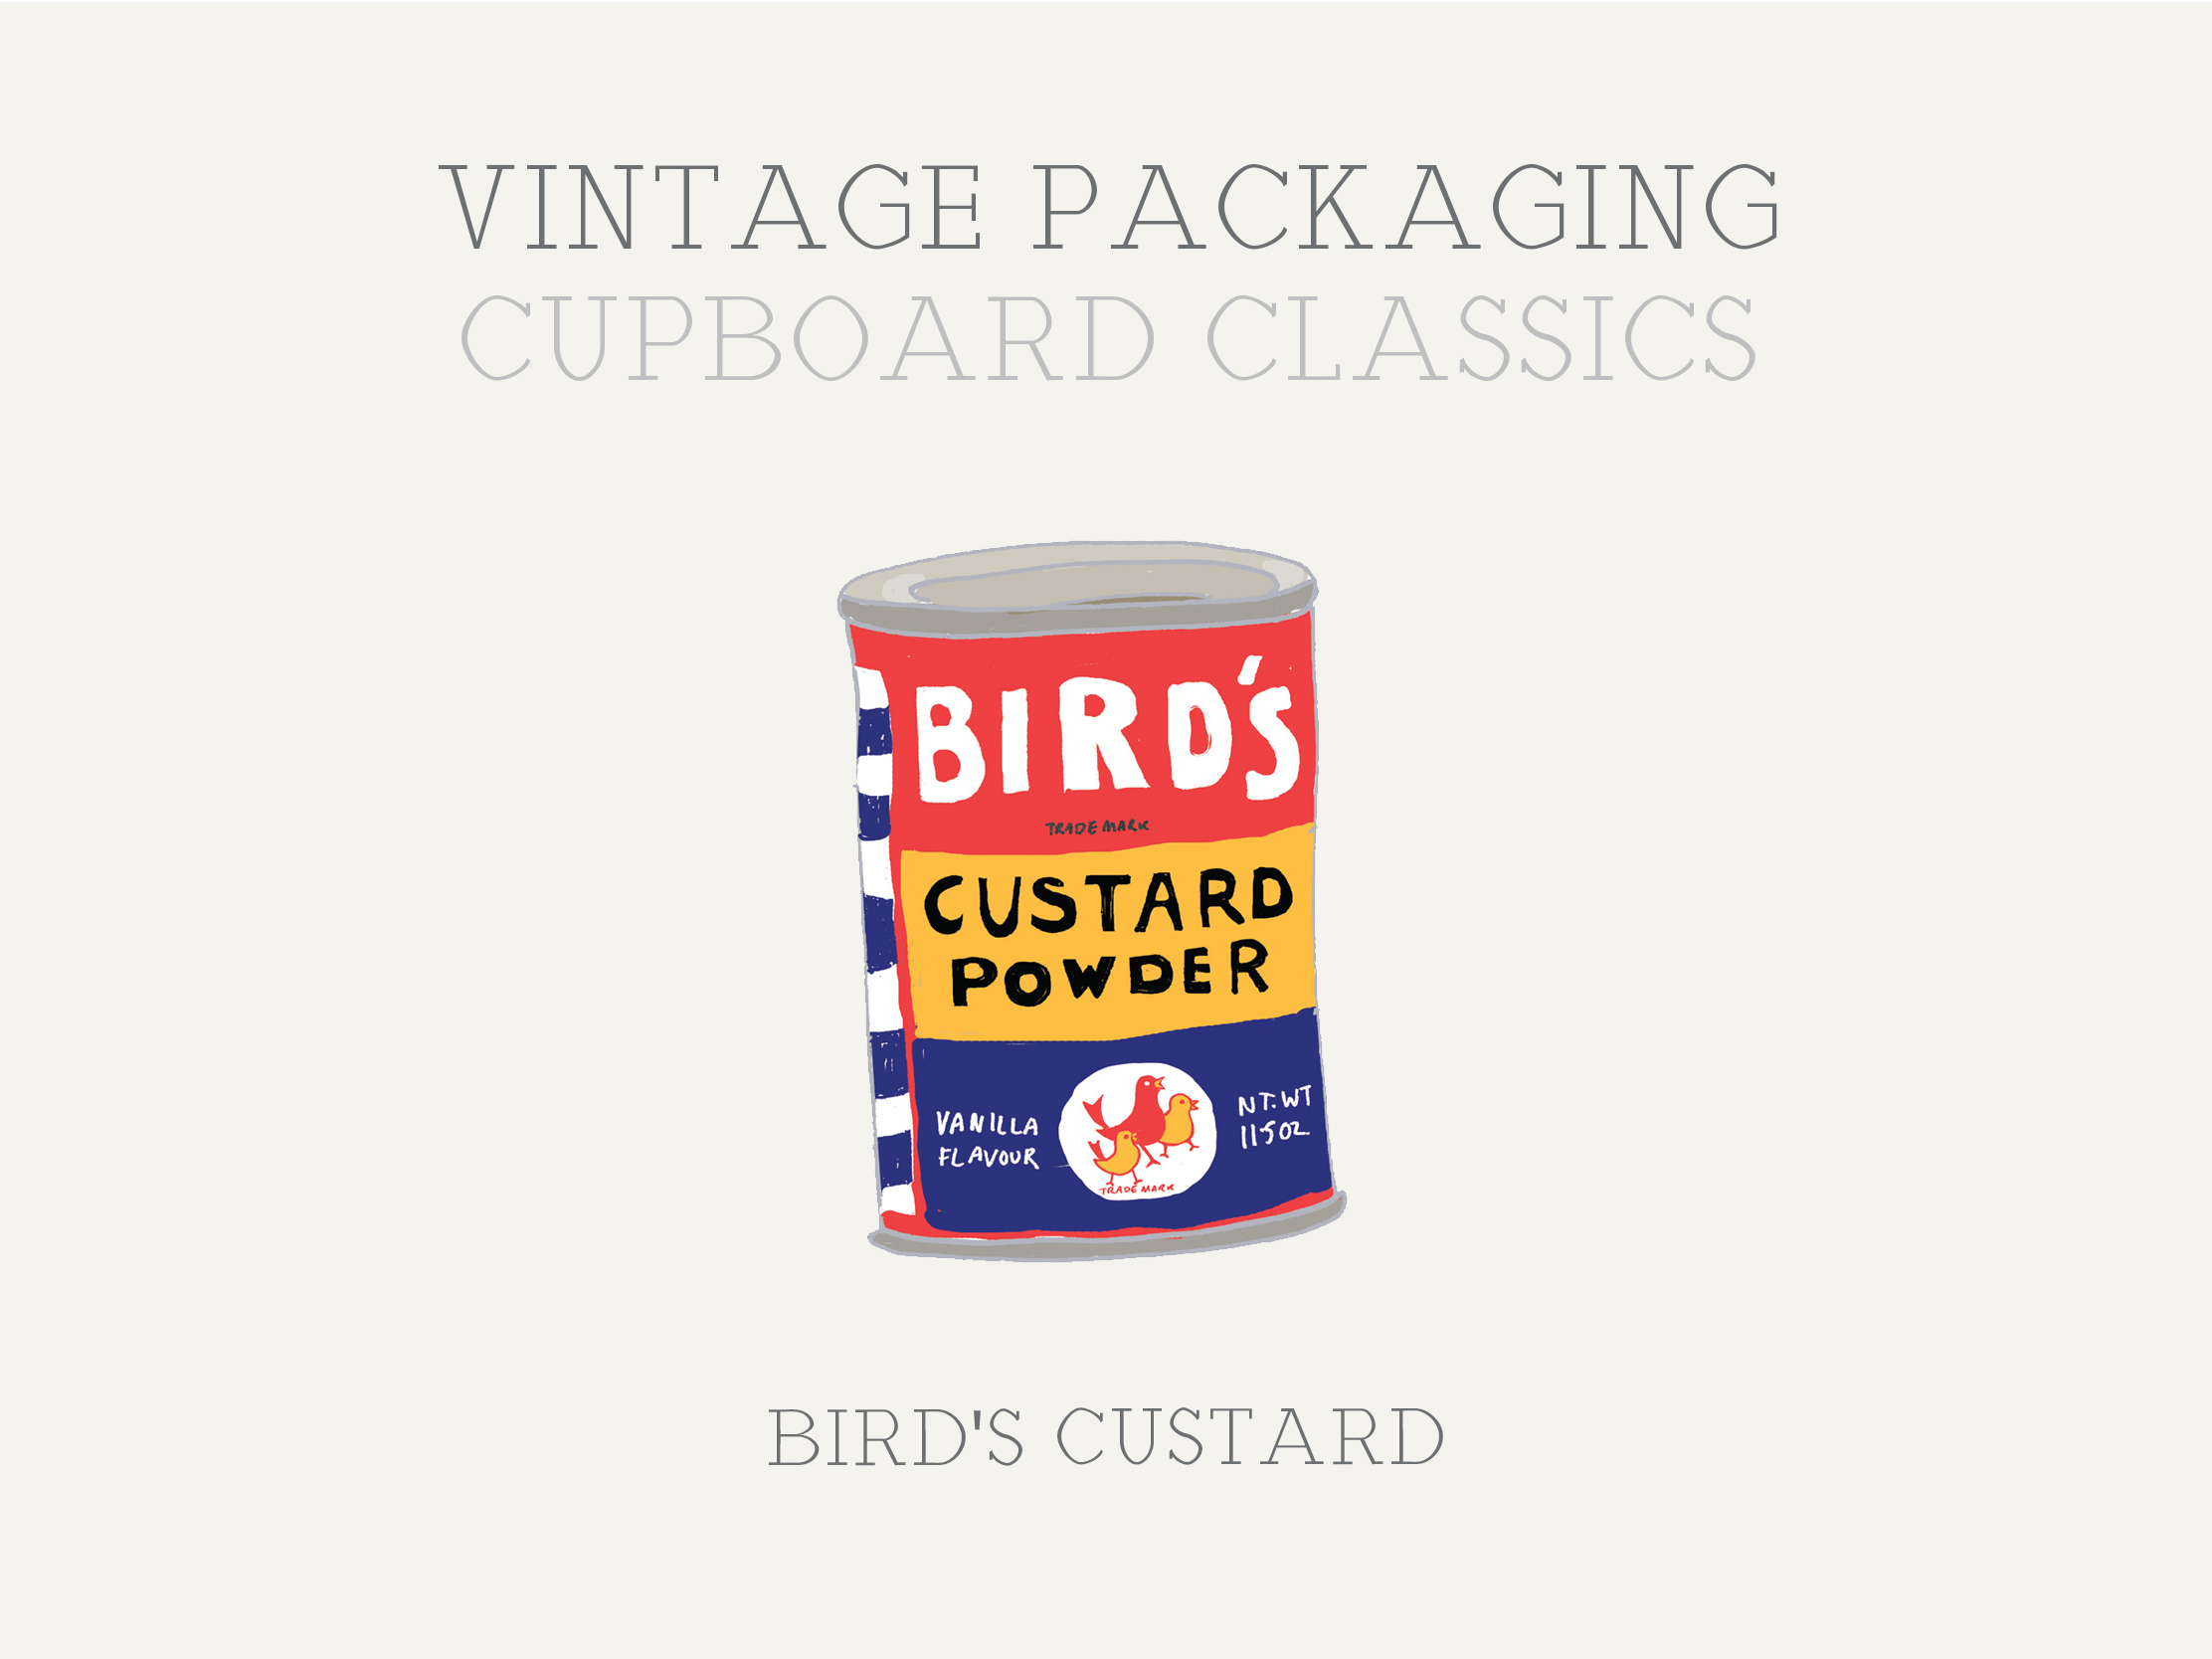 The November newsletter featuring the vintage illustration of Bird's Custard